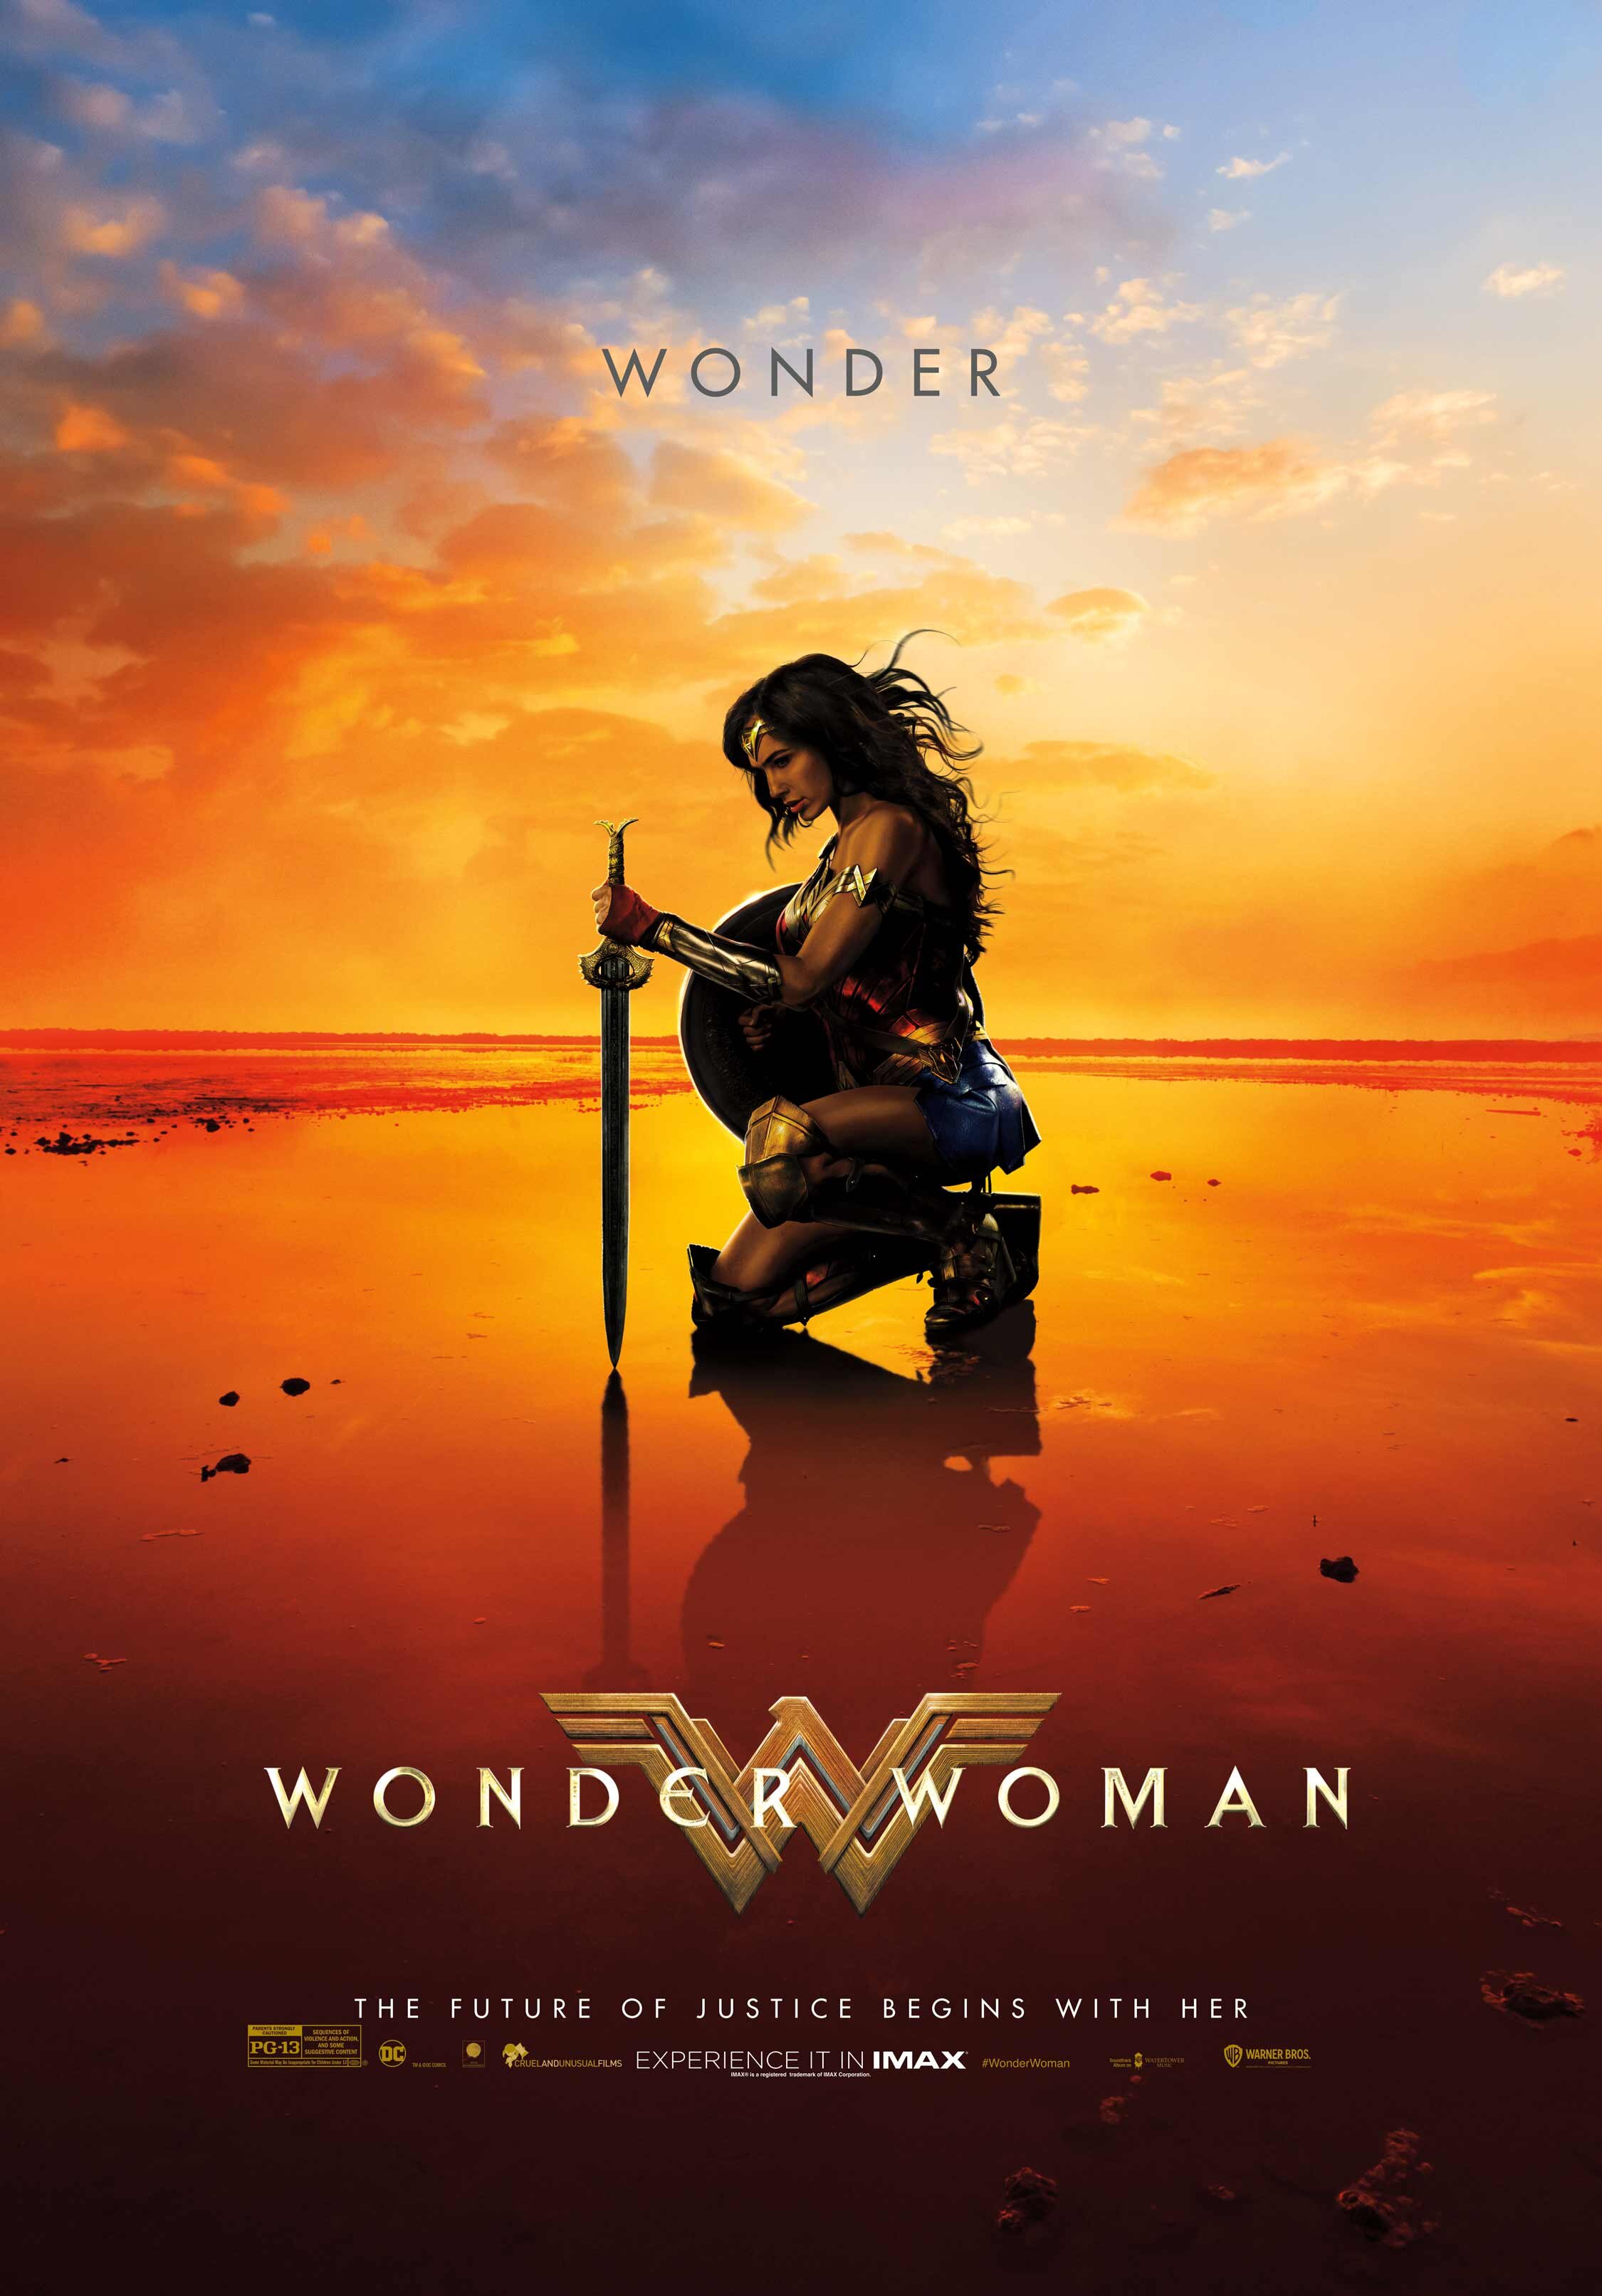 Wonder Woman1984 Imax Poster Wallpapers